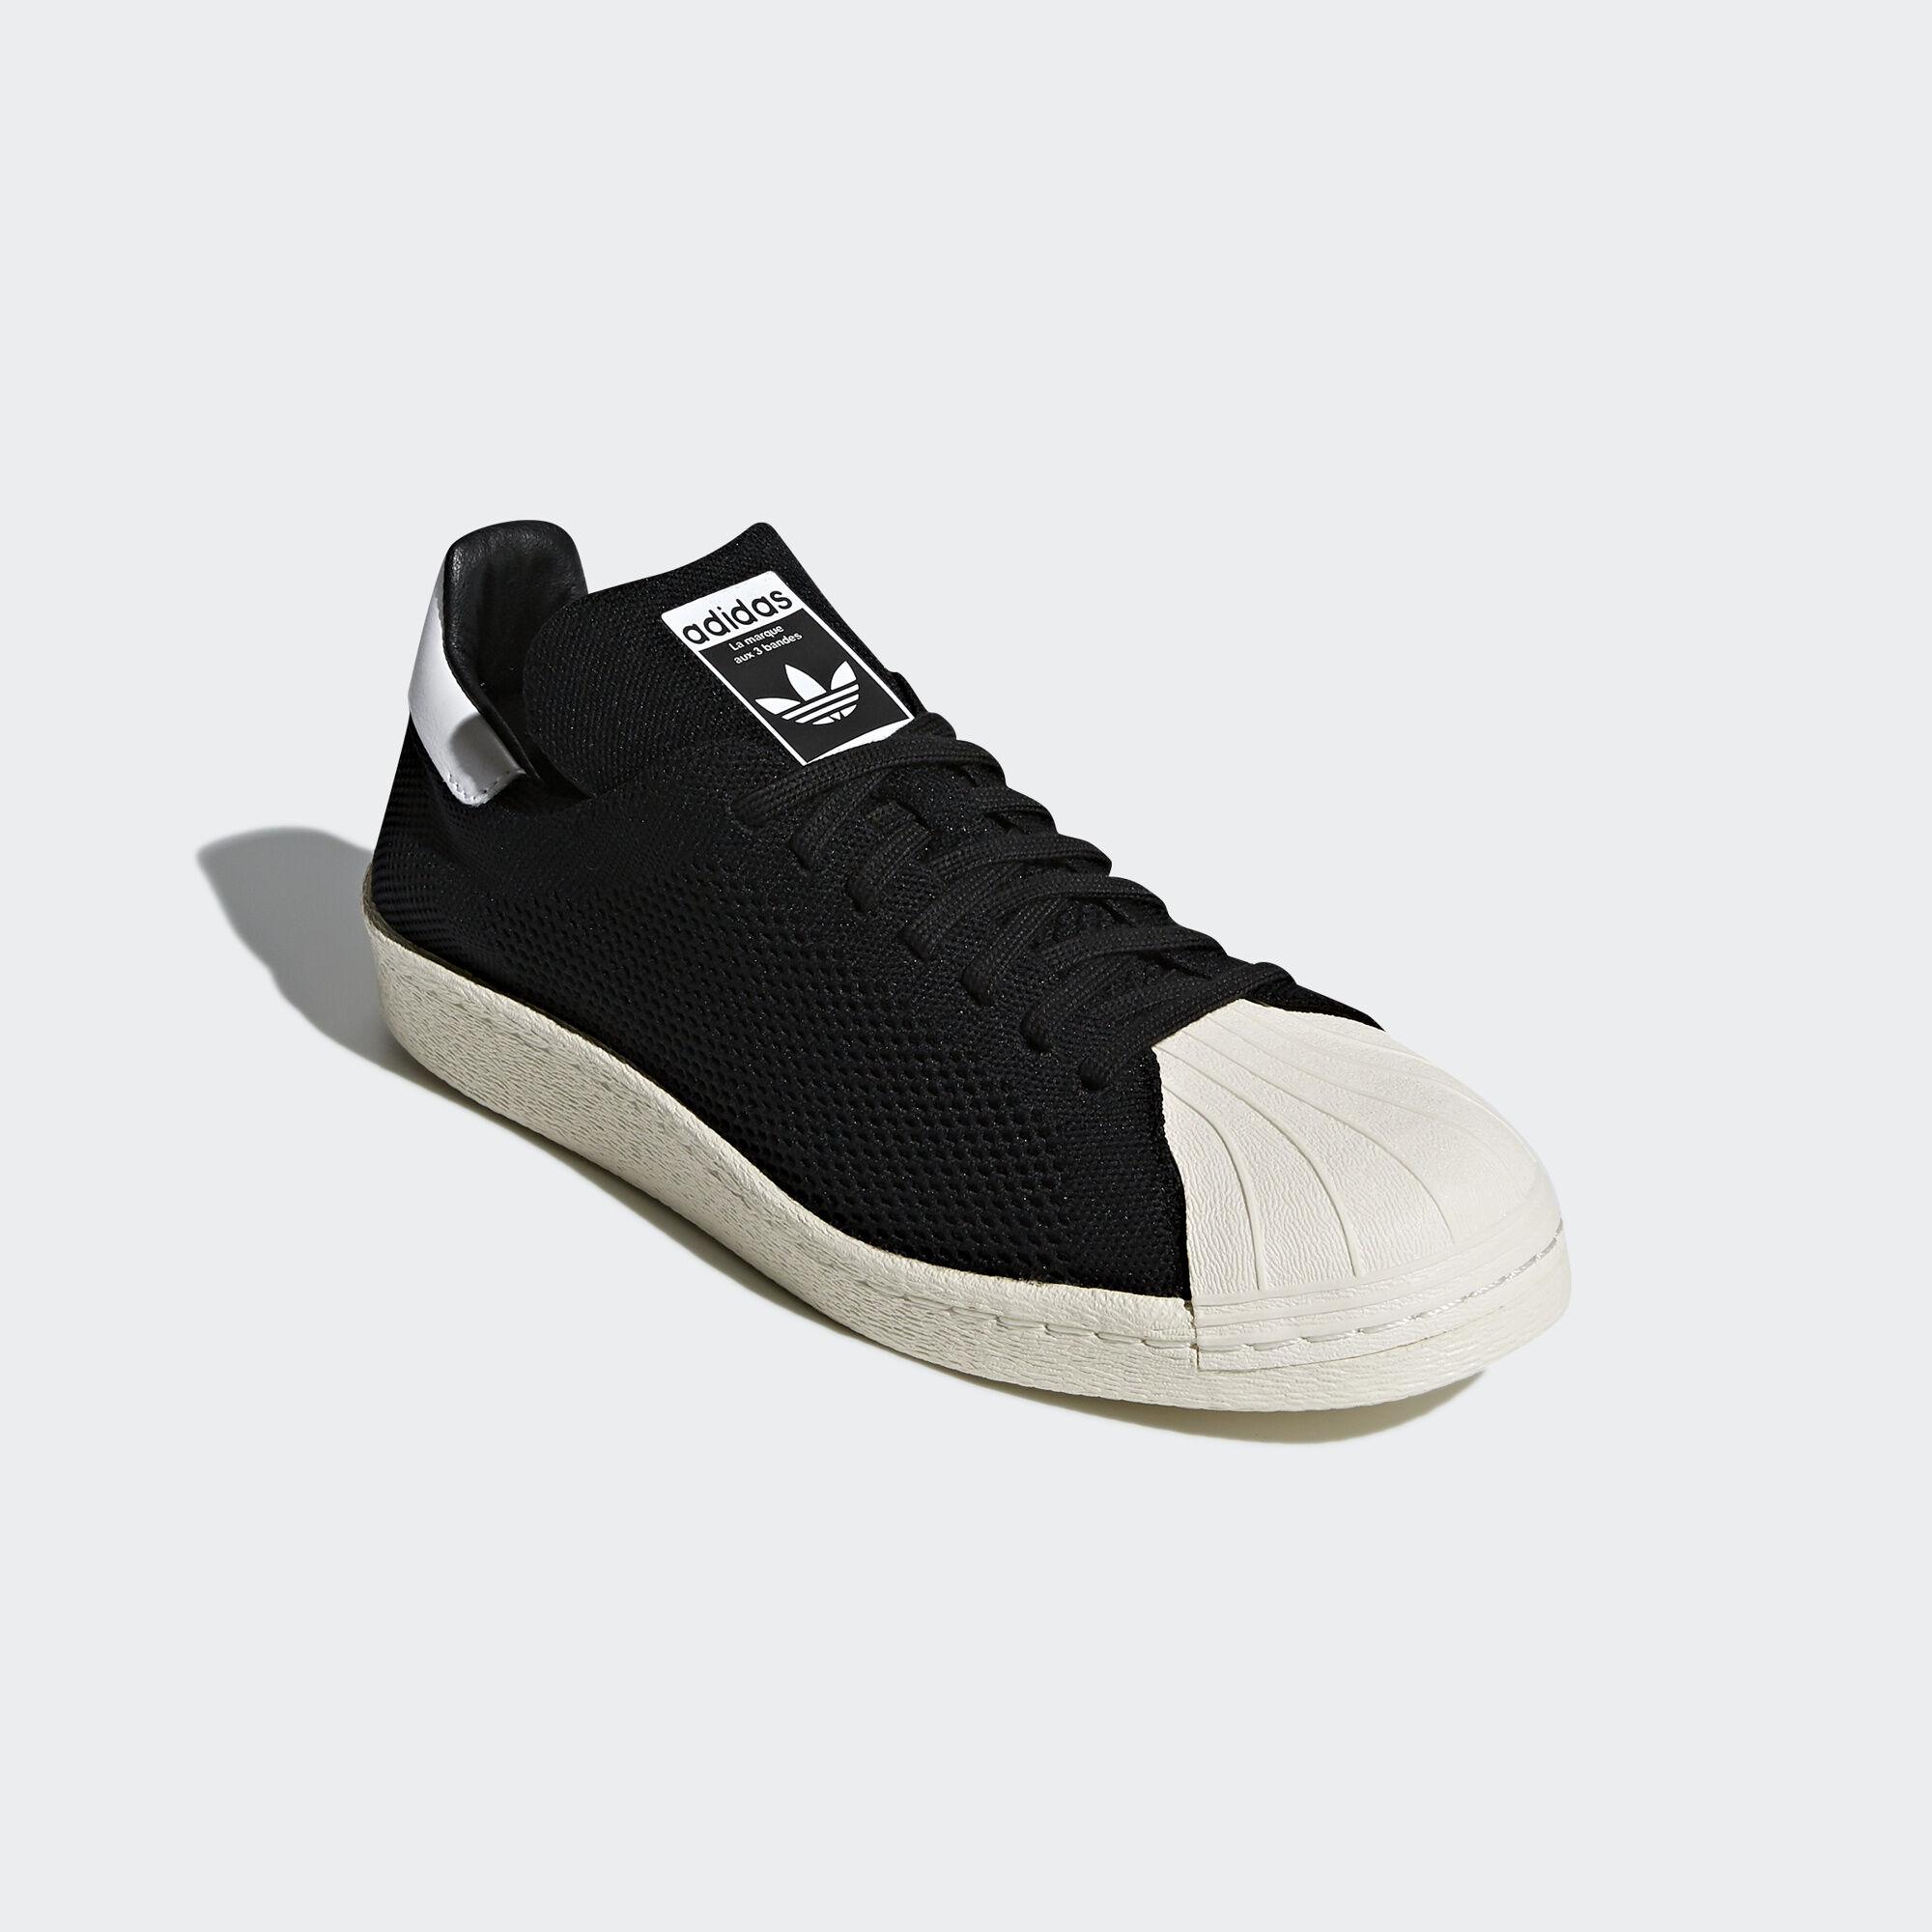 adidas Superstar 80s Primeknit Shoes in Black - Lyst